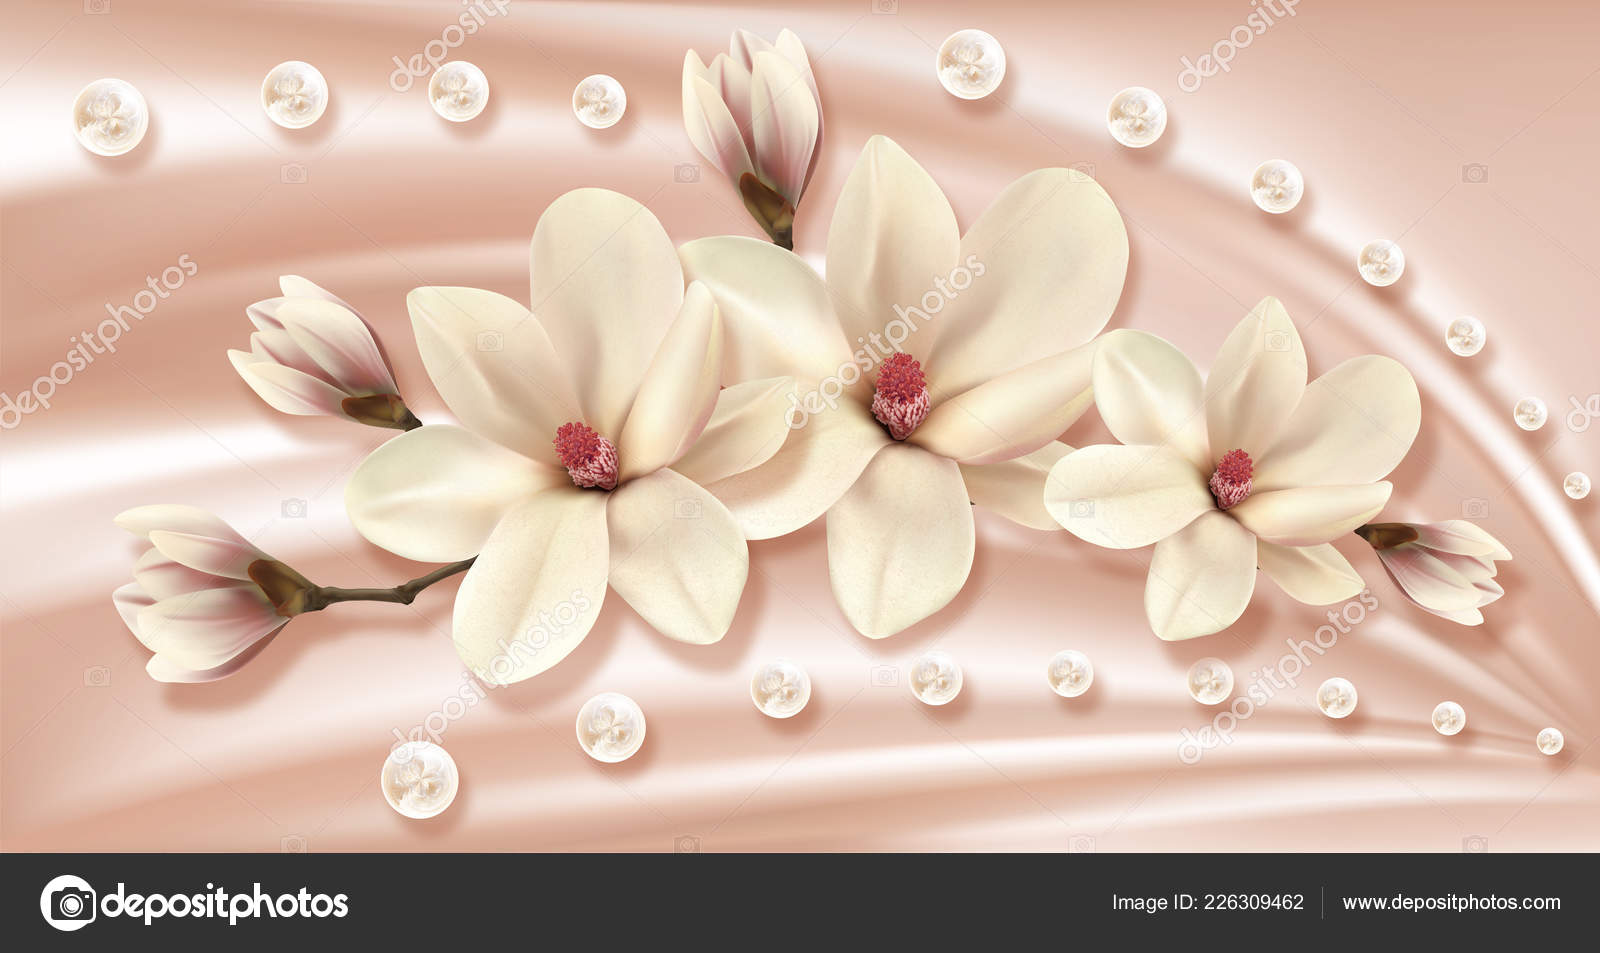 Plaster Texture Wallpaper - Magnolia